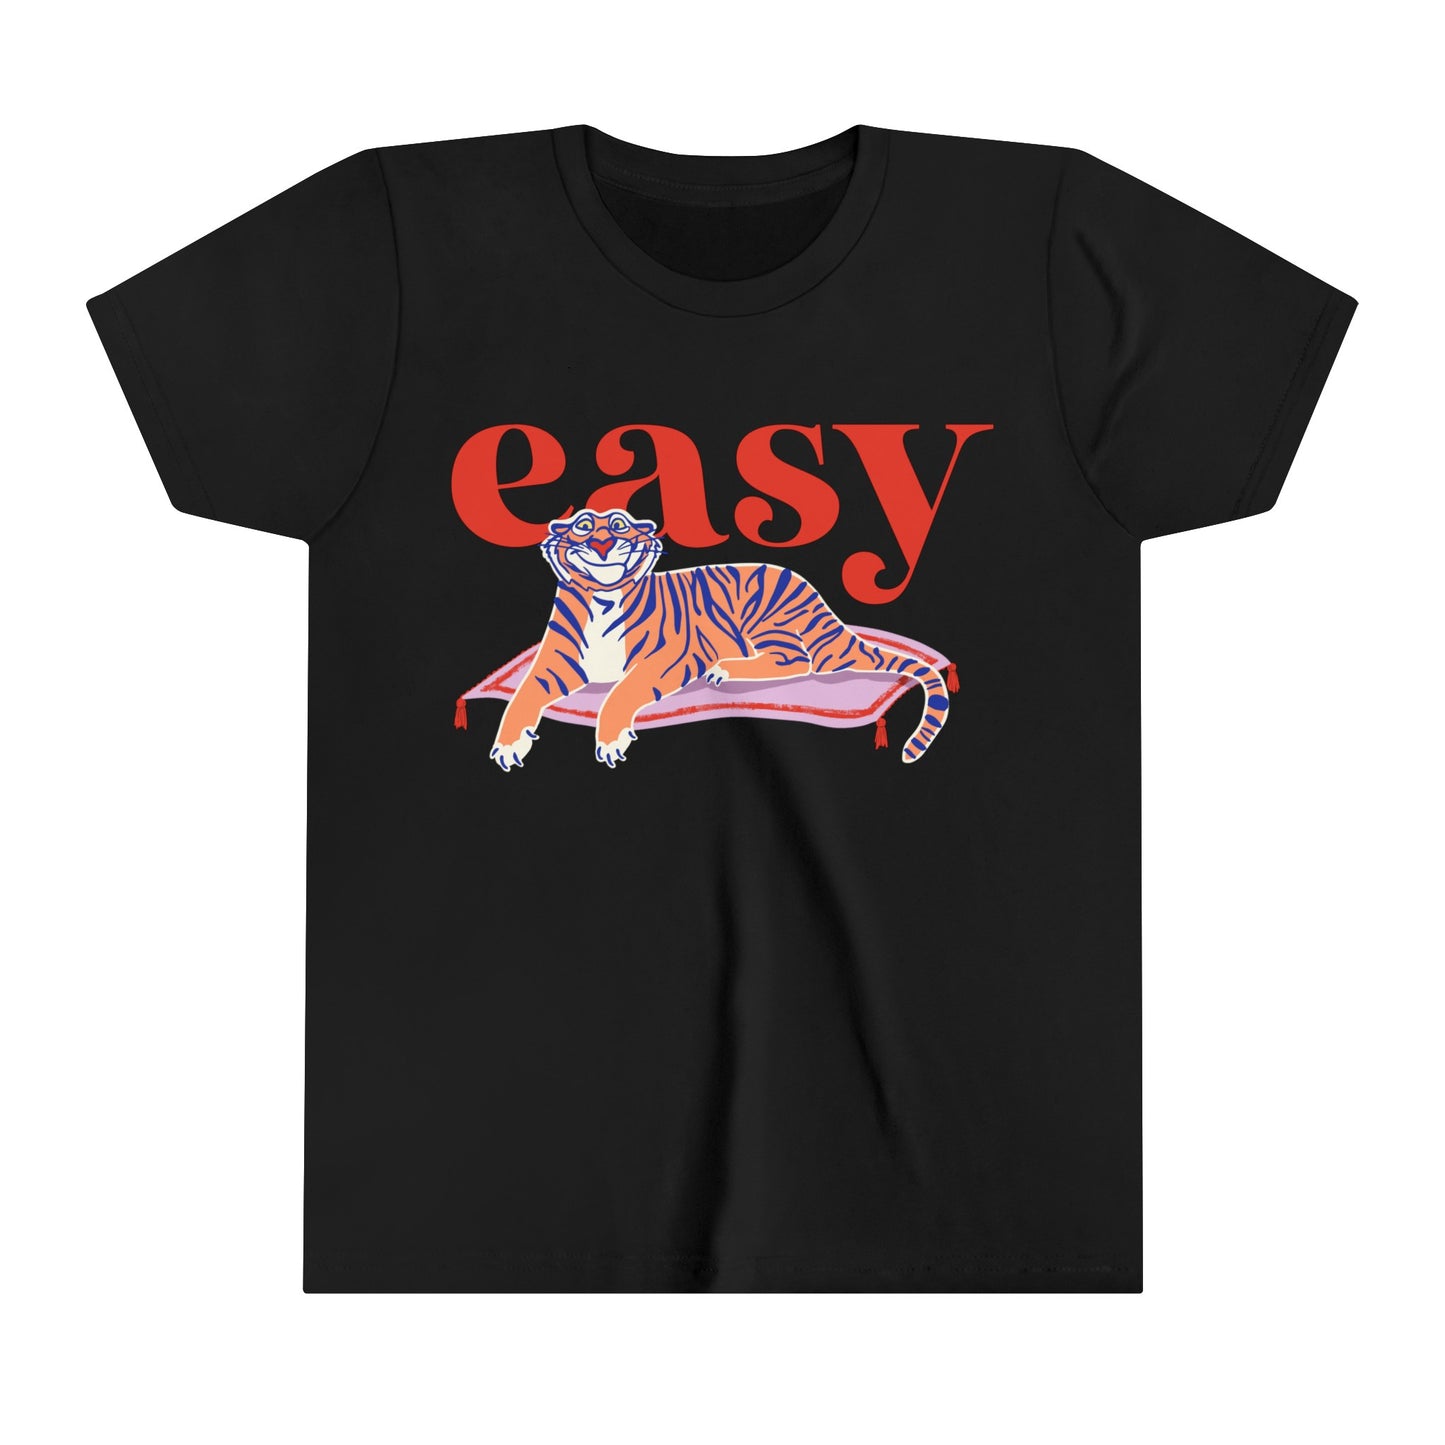 Easy Tiger - Rajah - Youth Short Sleeve Tee Shirt